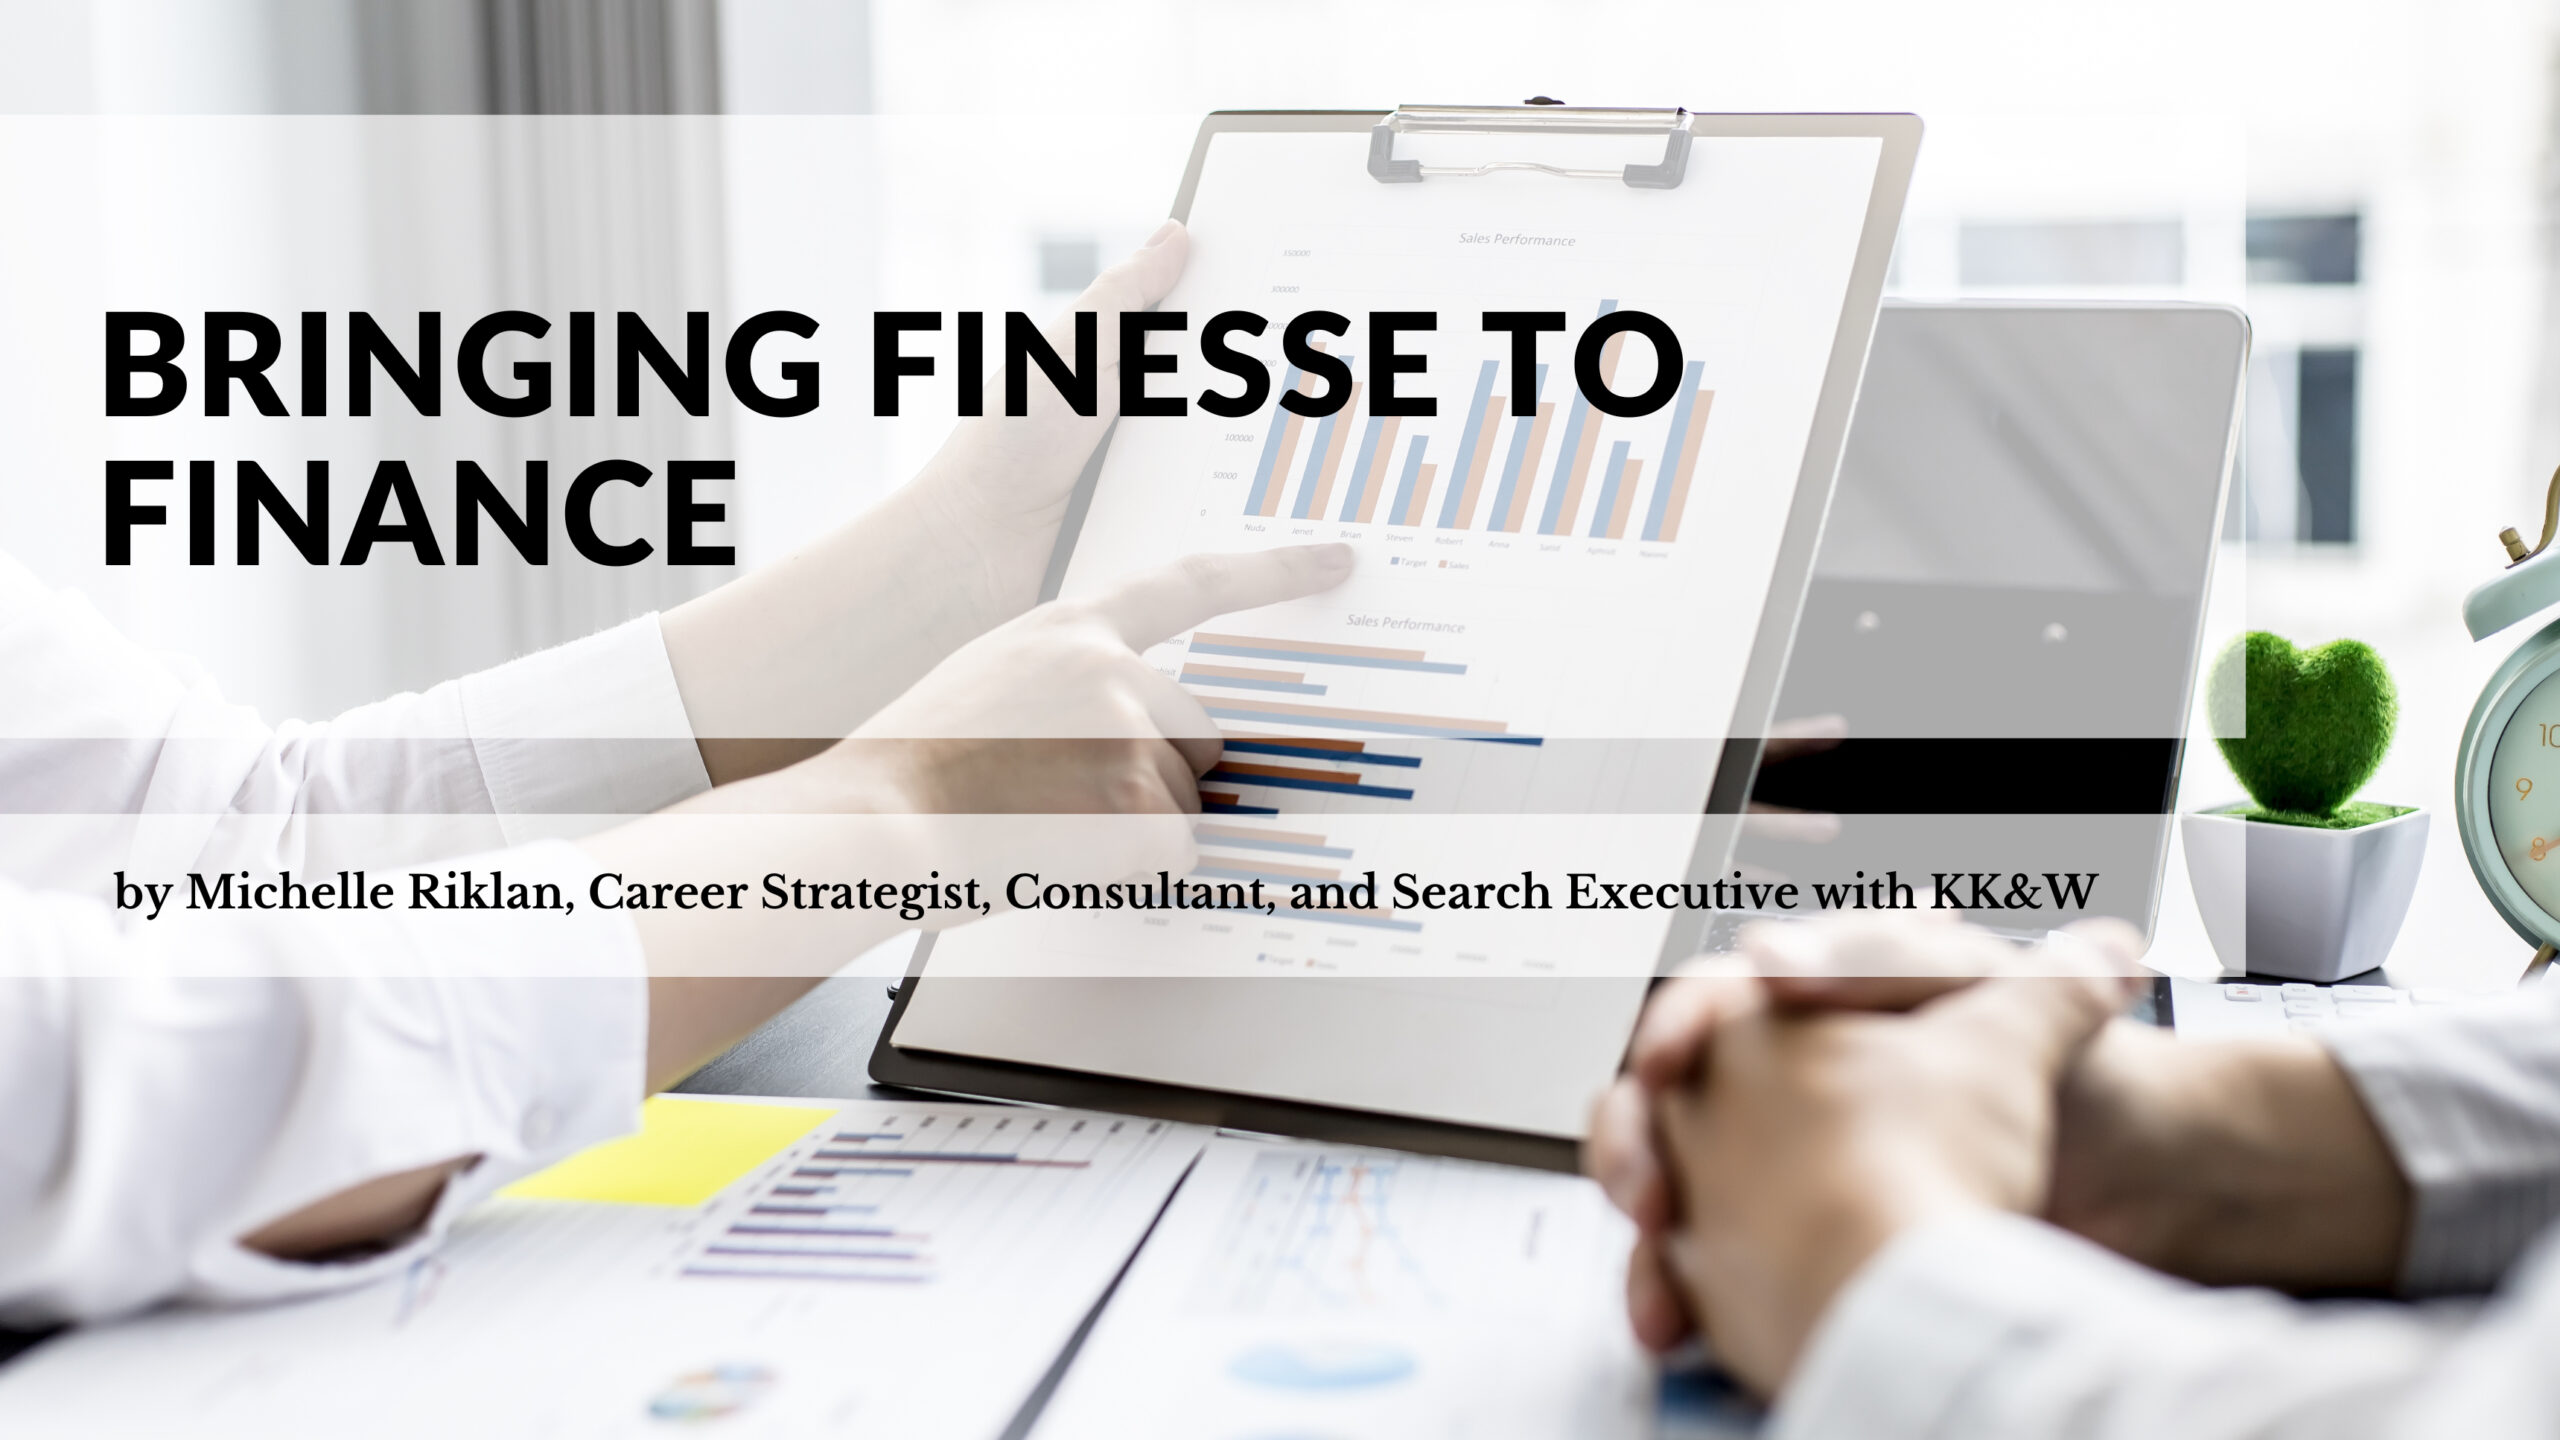 Bringing Finesse to Finance